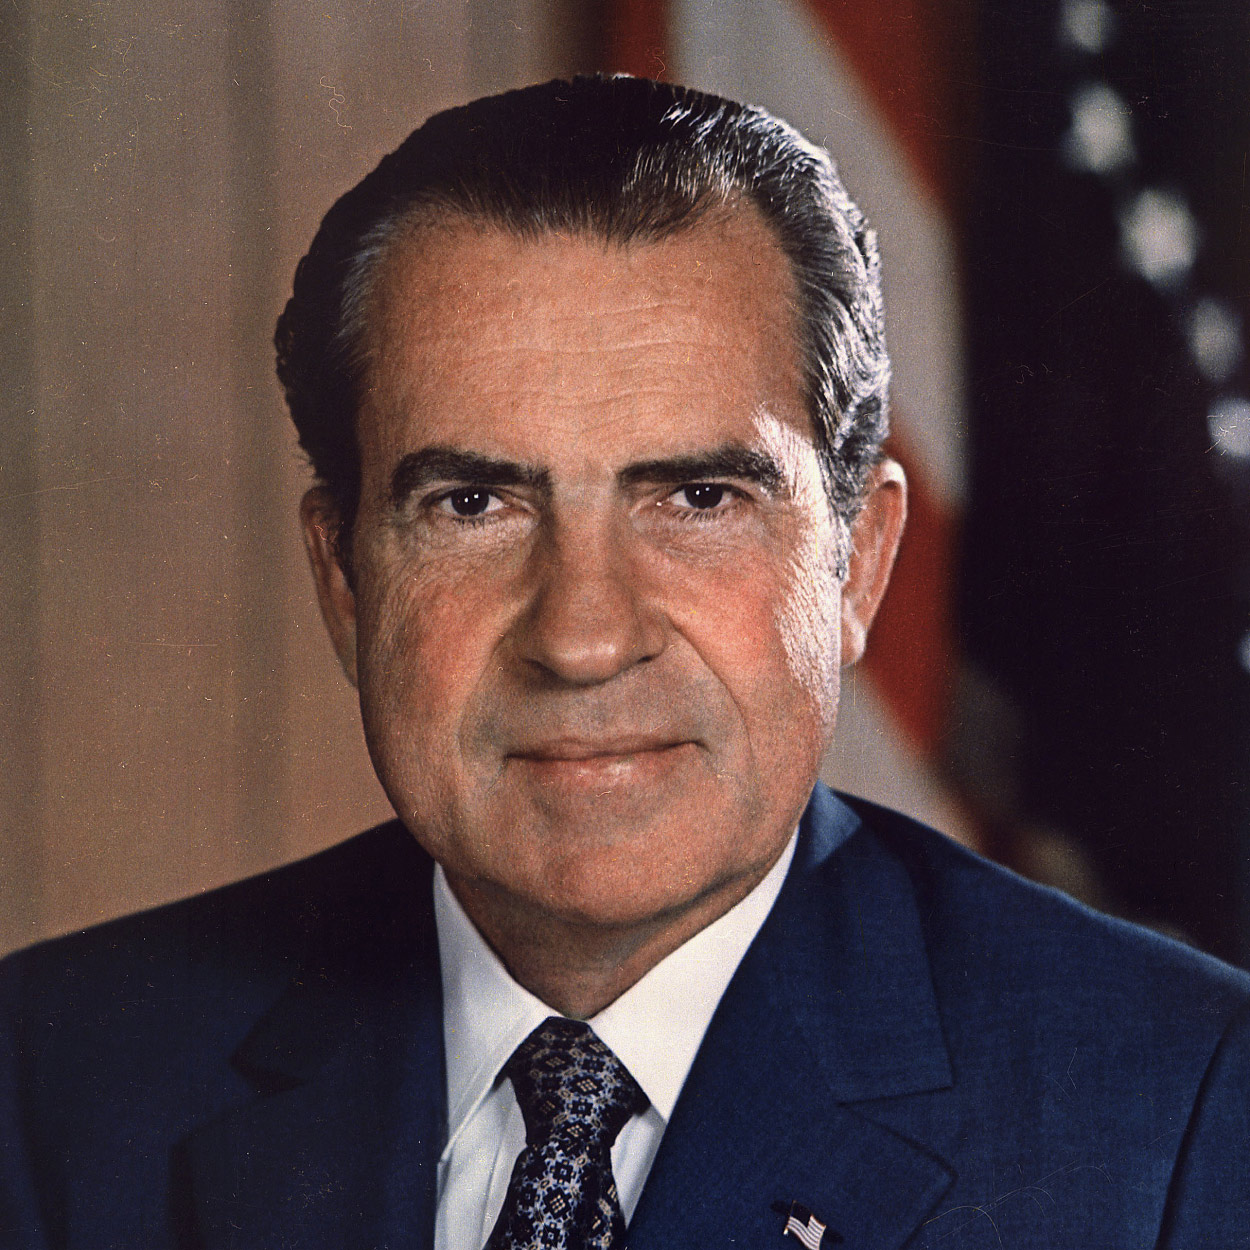 nixon)此前担任美国代表和加州参议员,当选为美国第37任总统(1969